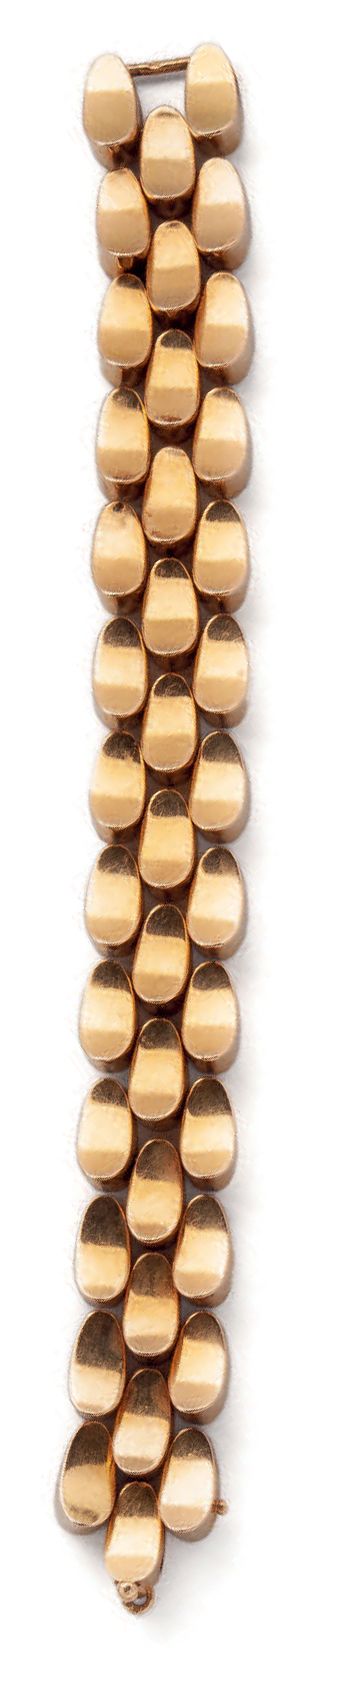 Null 黄金(750)带状手镯，有凹陷的椭圆形衔接环节。
，有八个安全别针的隐形扣。
摩洛哥作品，约1950-60年。
重量：72.1克。
长度：19厘米。-&hellip;